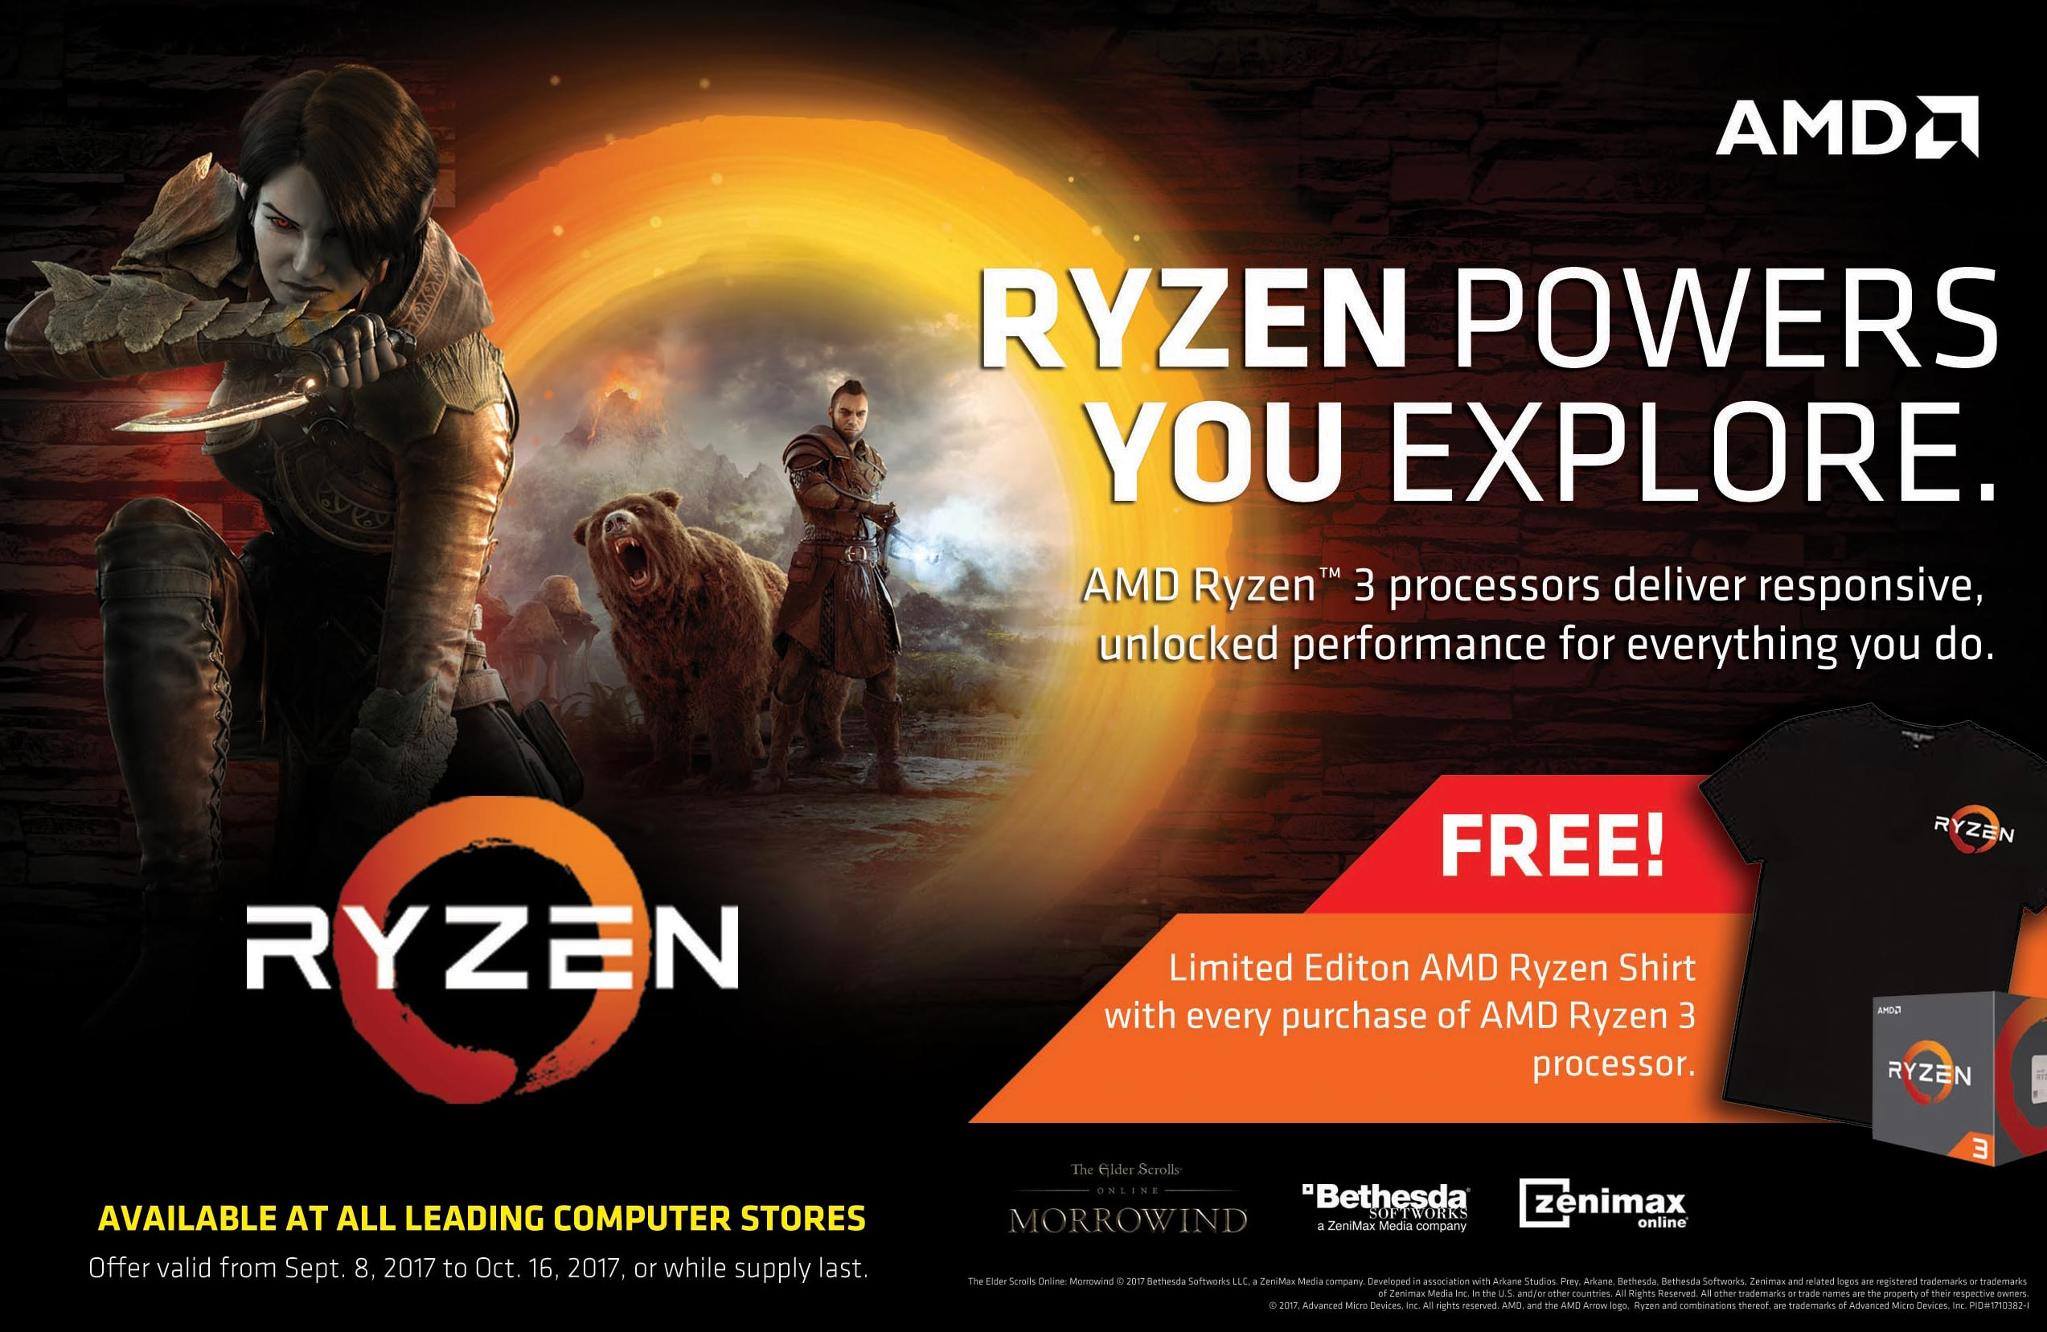 Get a FREE Ryzen Shirt for Every Purchase of an AMD Ryzen 3 Processor!